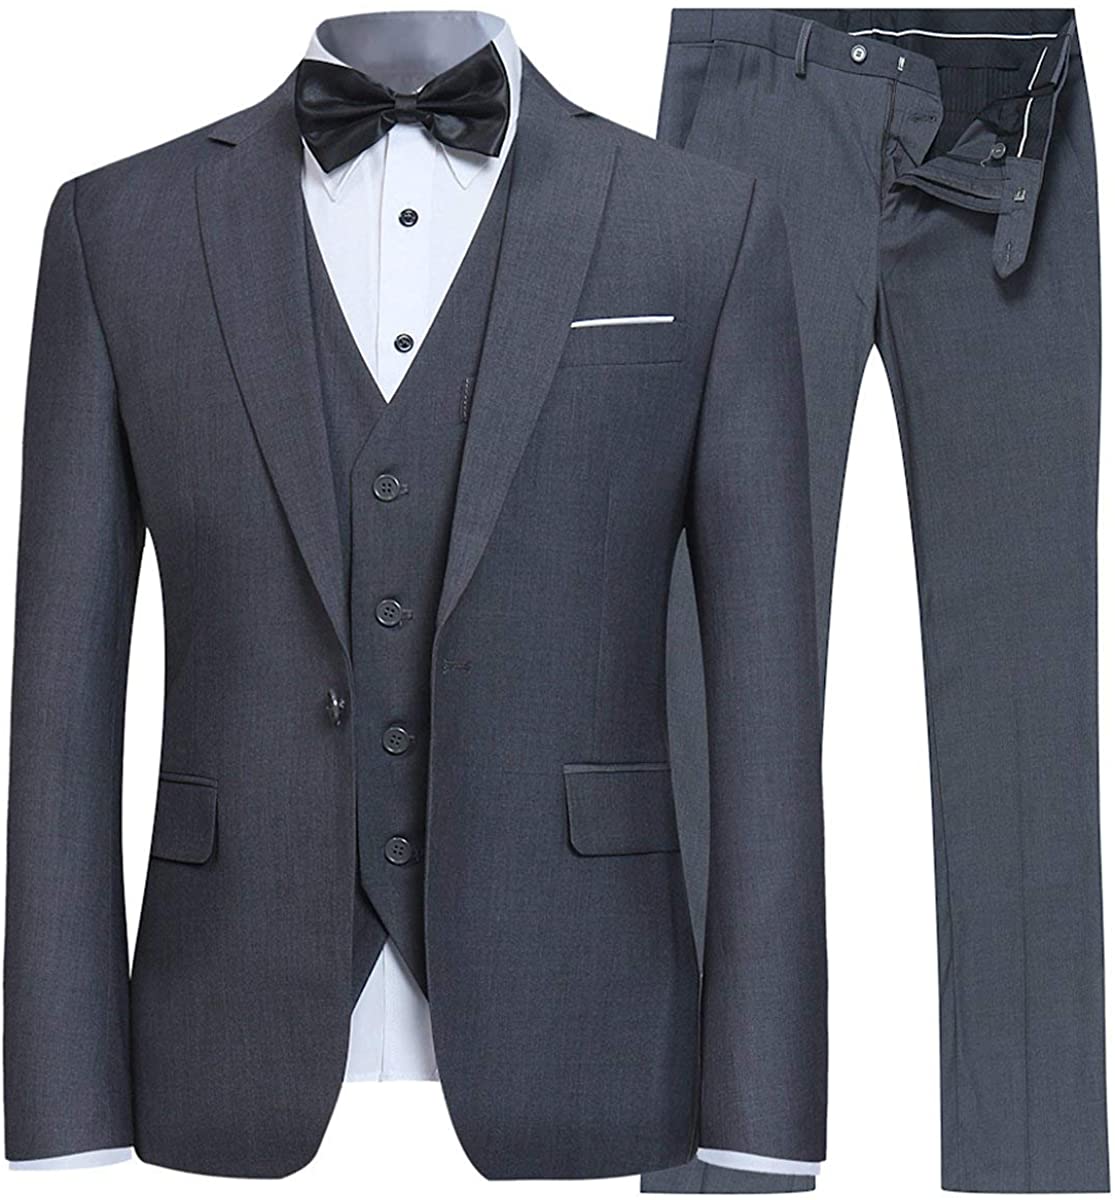 Men's slim business suit - Funmall